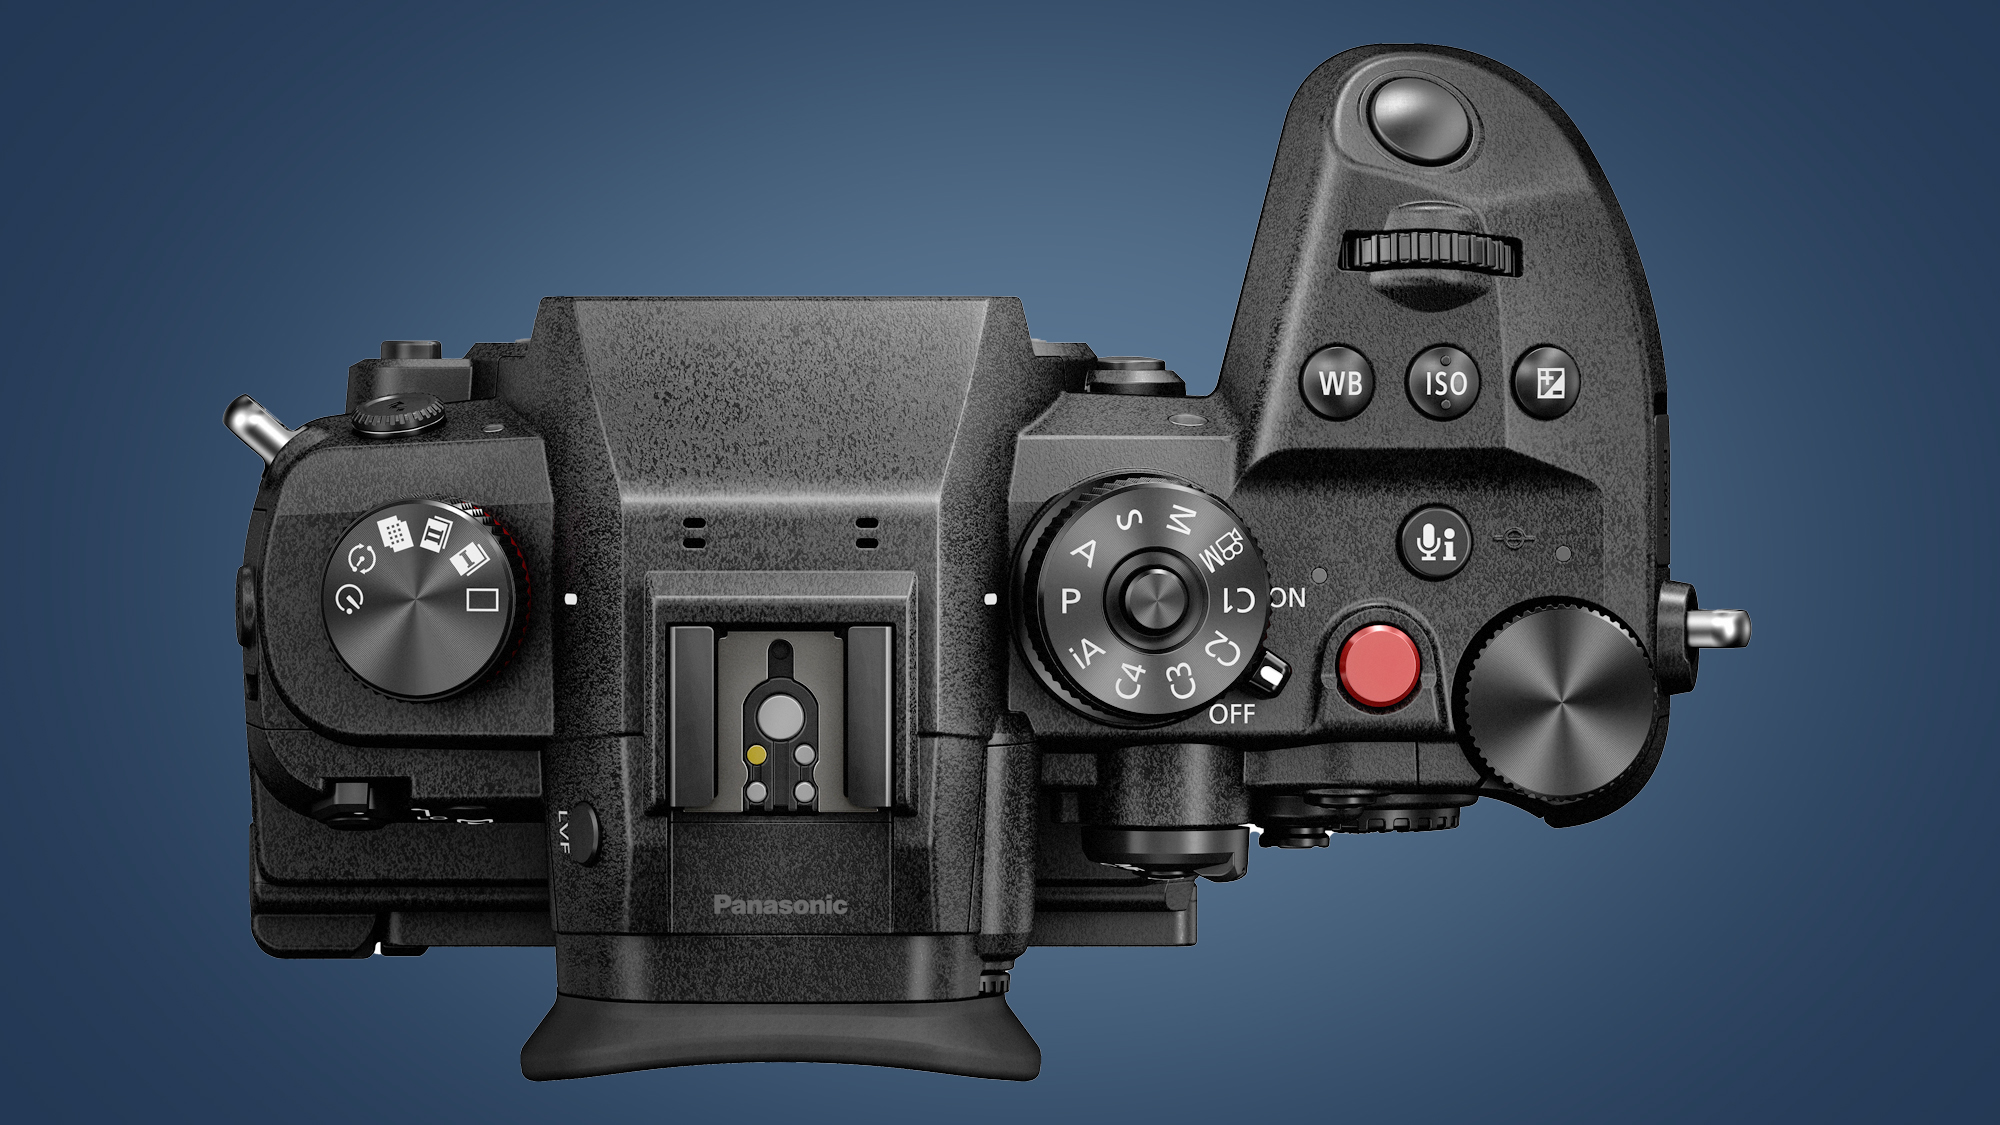 The top of the Panasonic Lumix GH6 camera